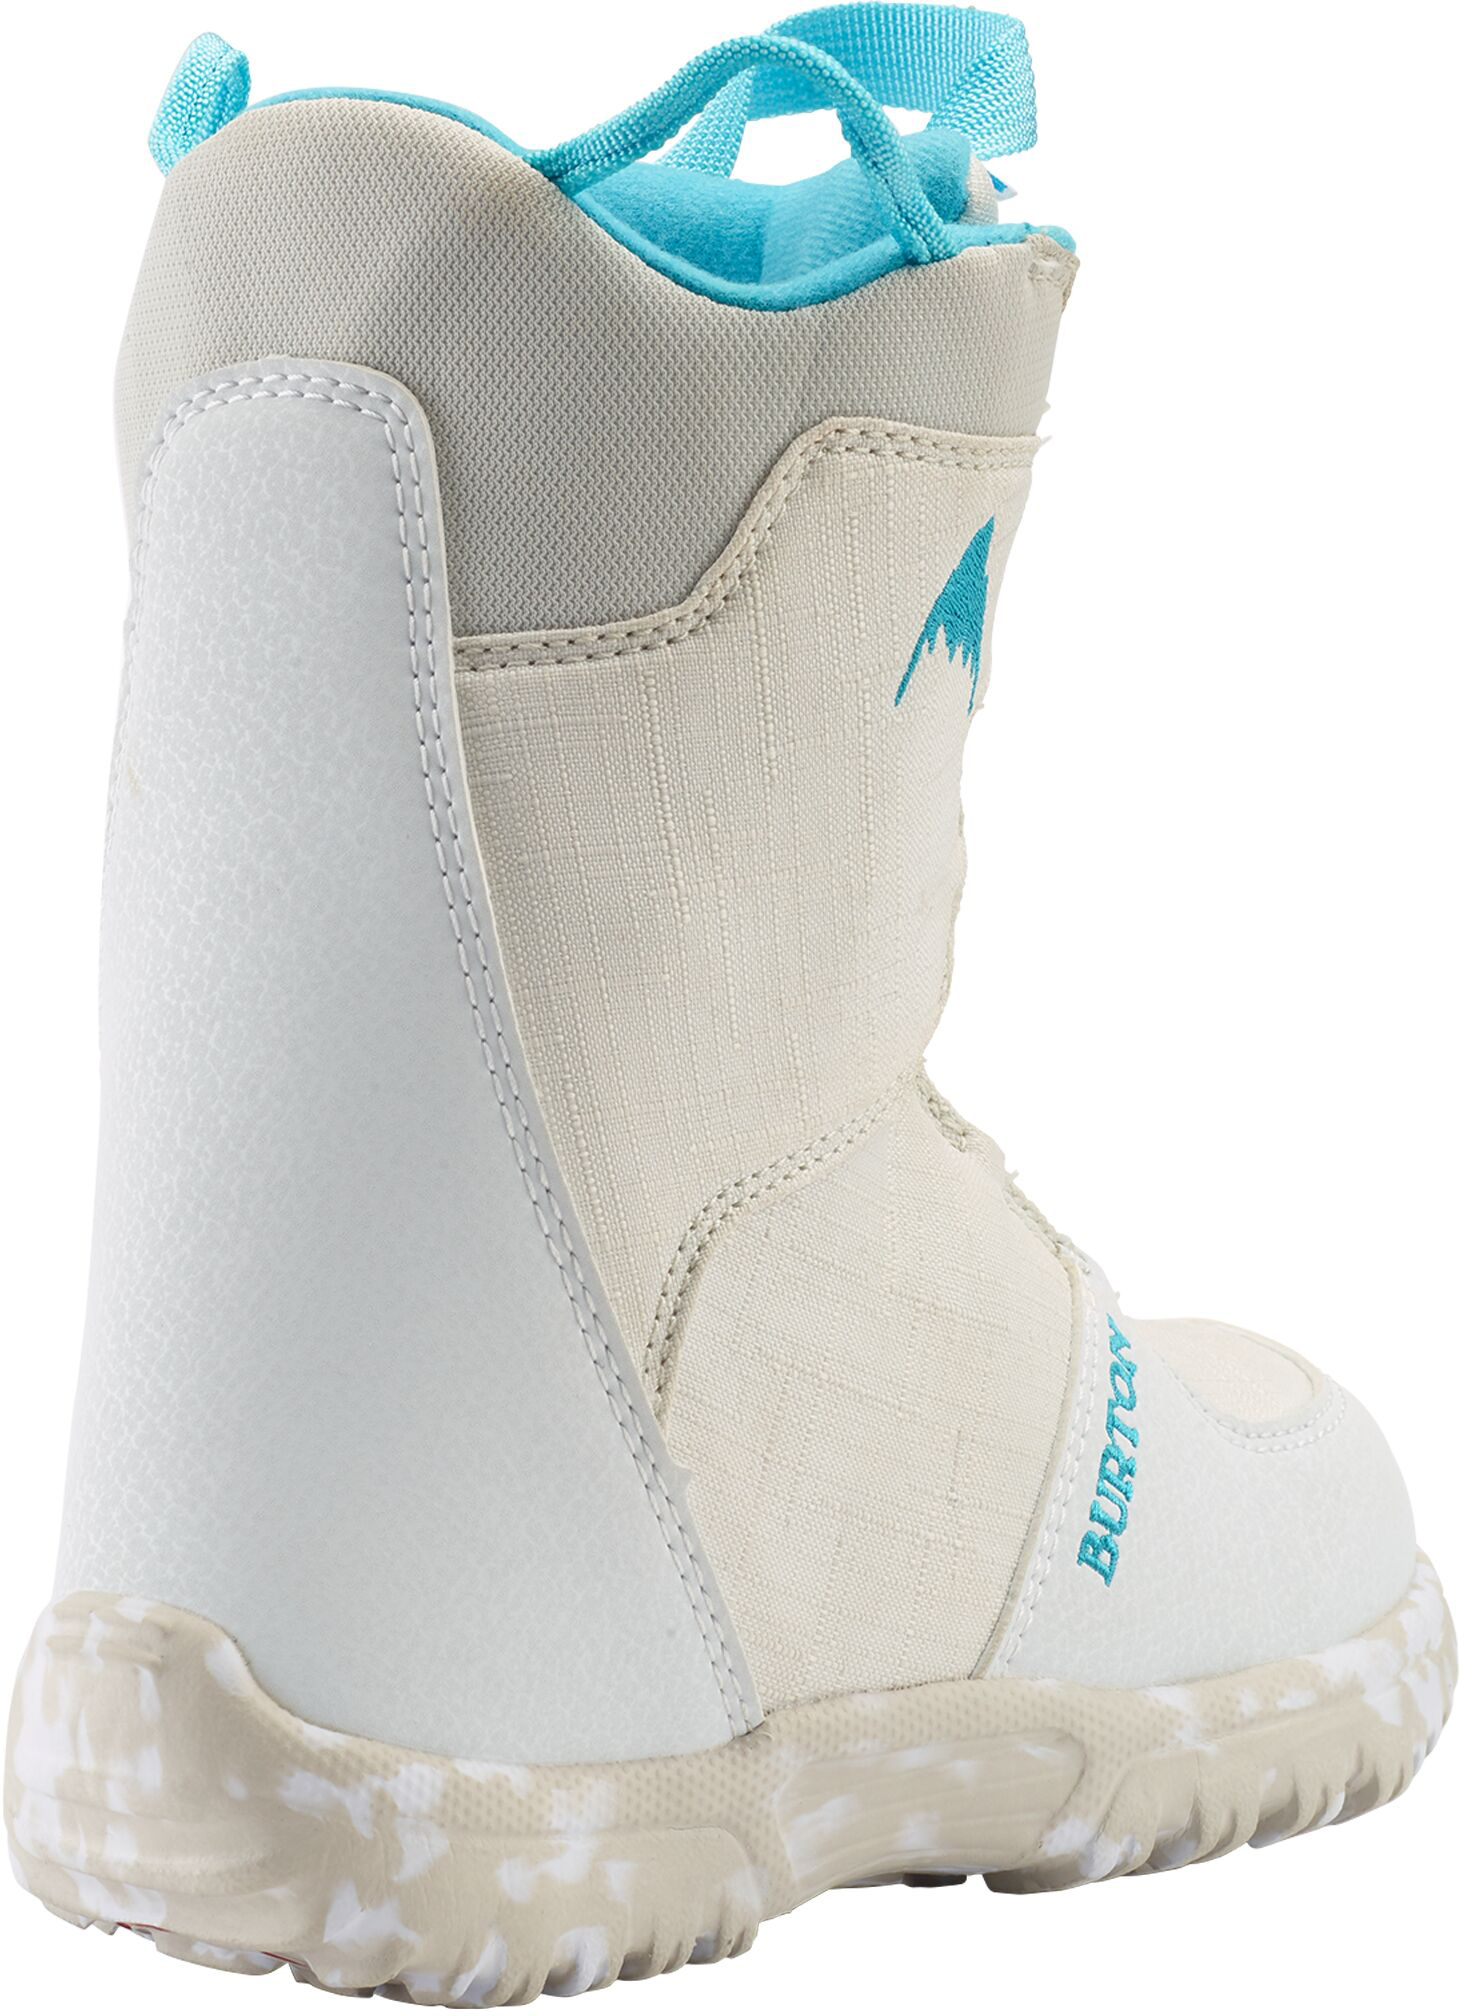 Burton Grom Boa Kid's Snowboard Boots